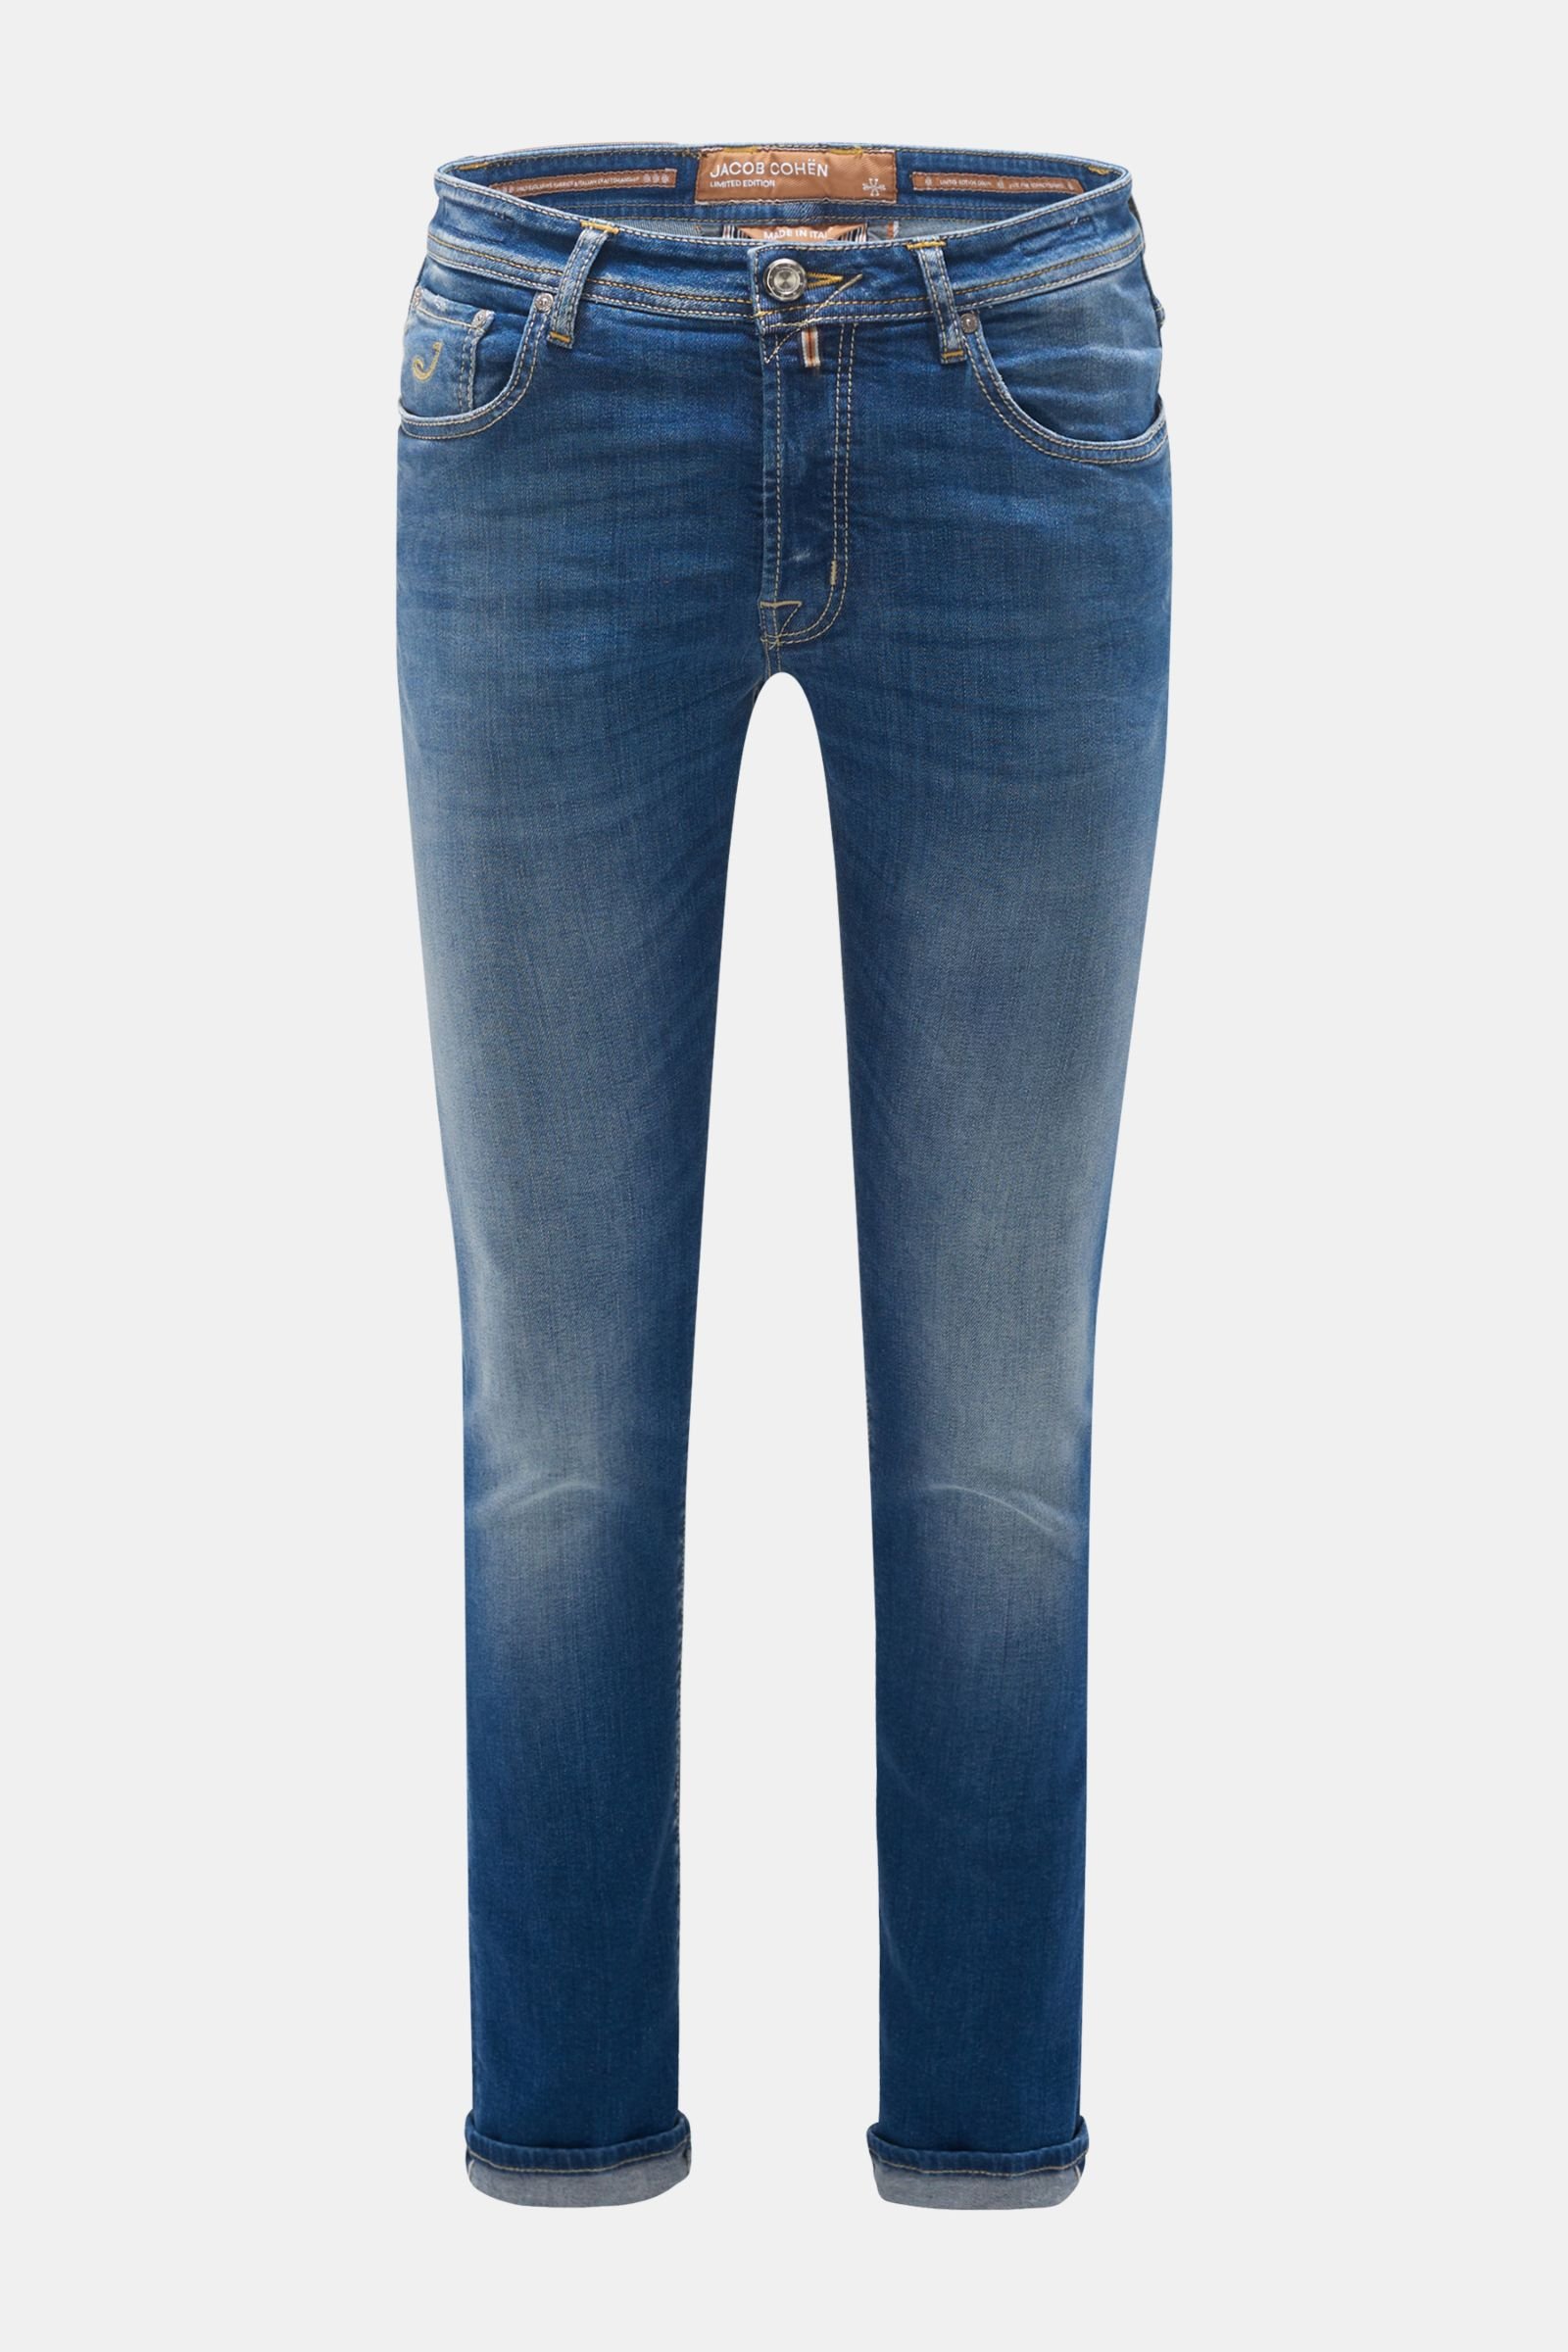 Jeans 'Bard Limited Edition' dunkelblau (ehemals J688)